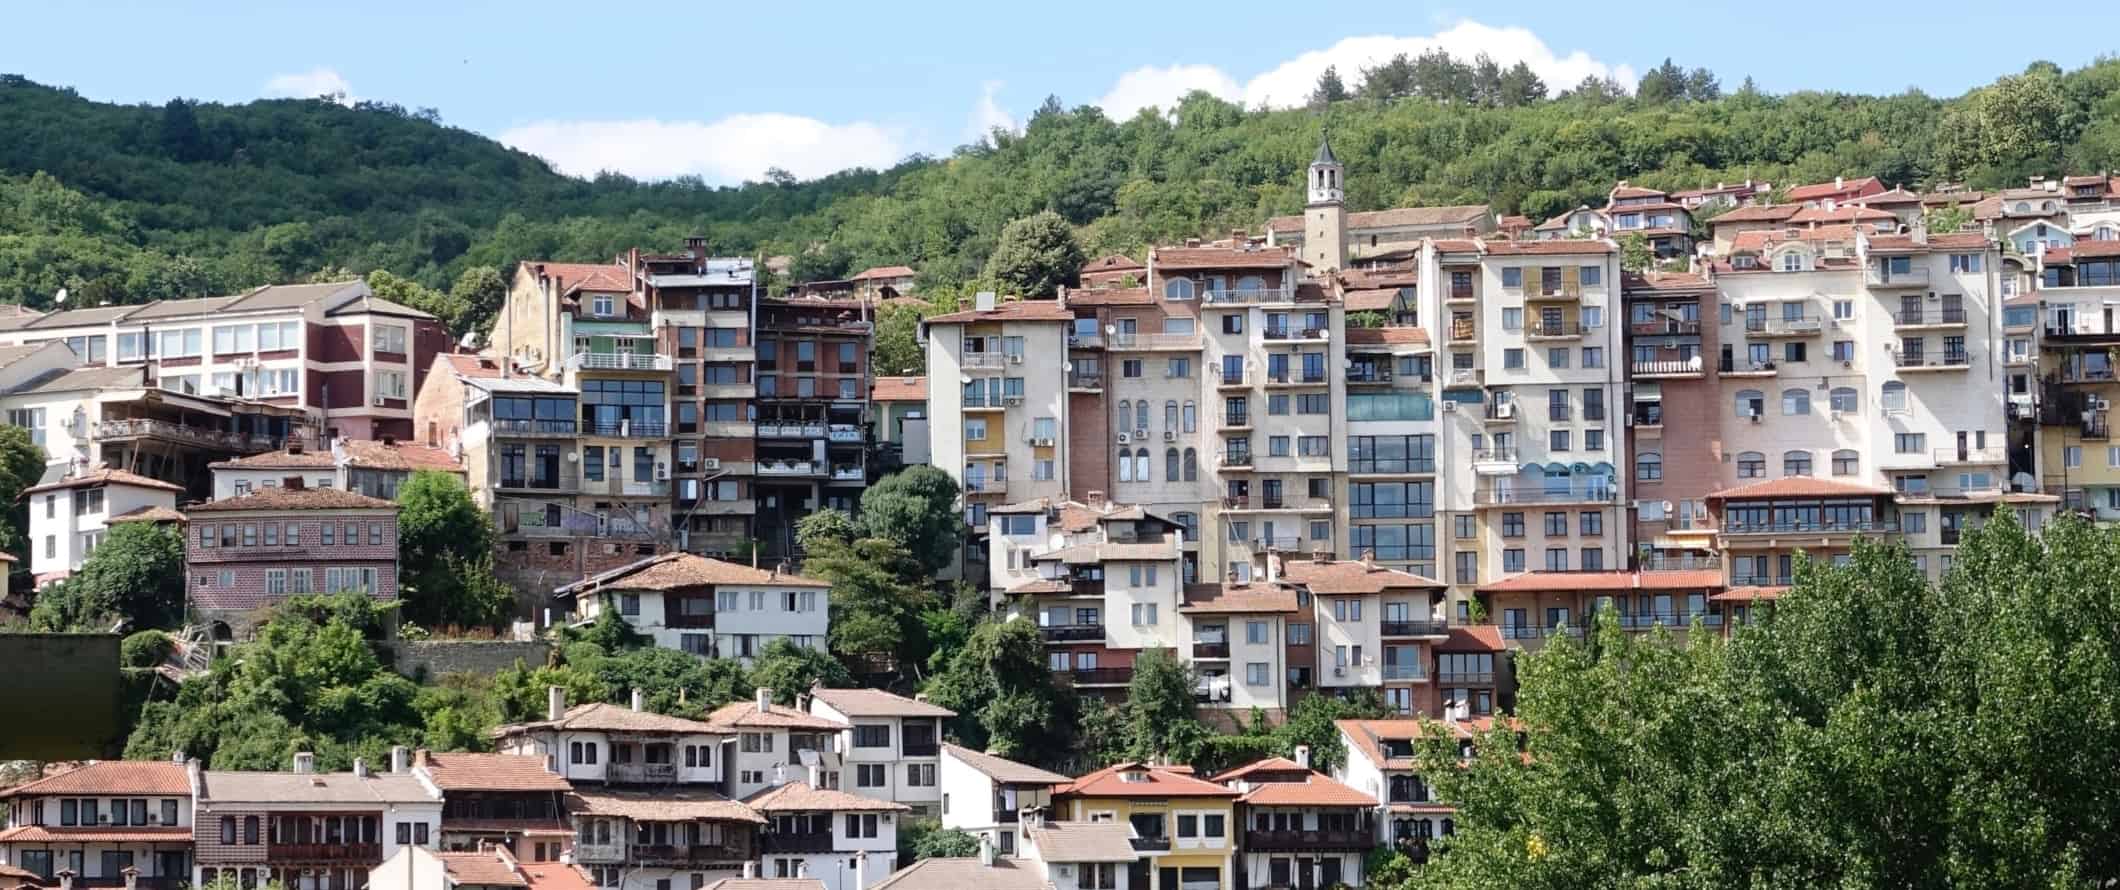 Stacked houses on top of houses in Veliko Tarnovo, Bulgaria